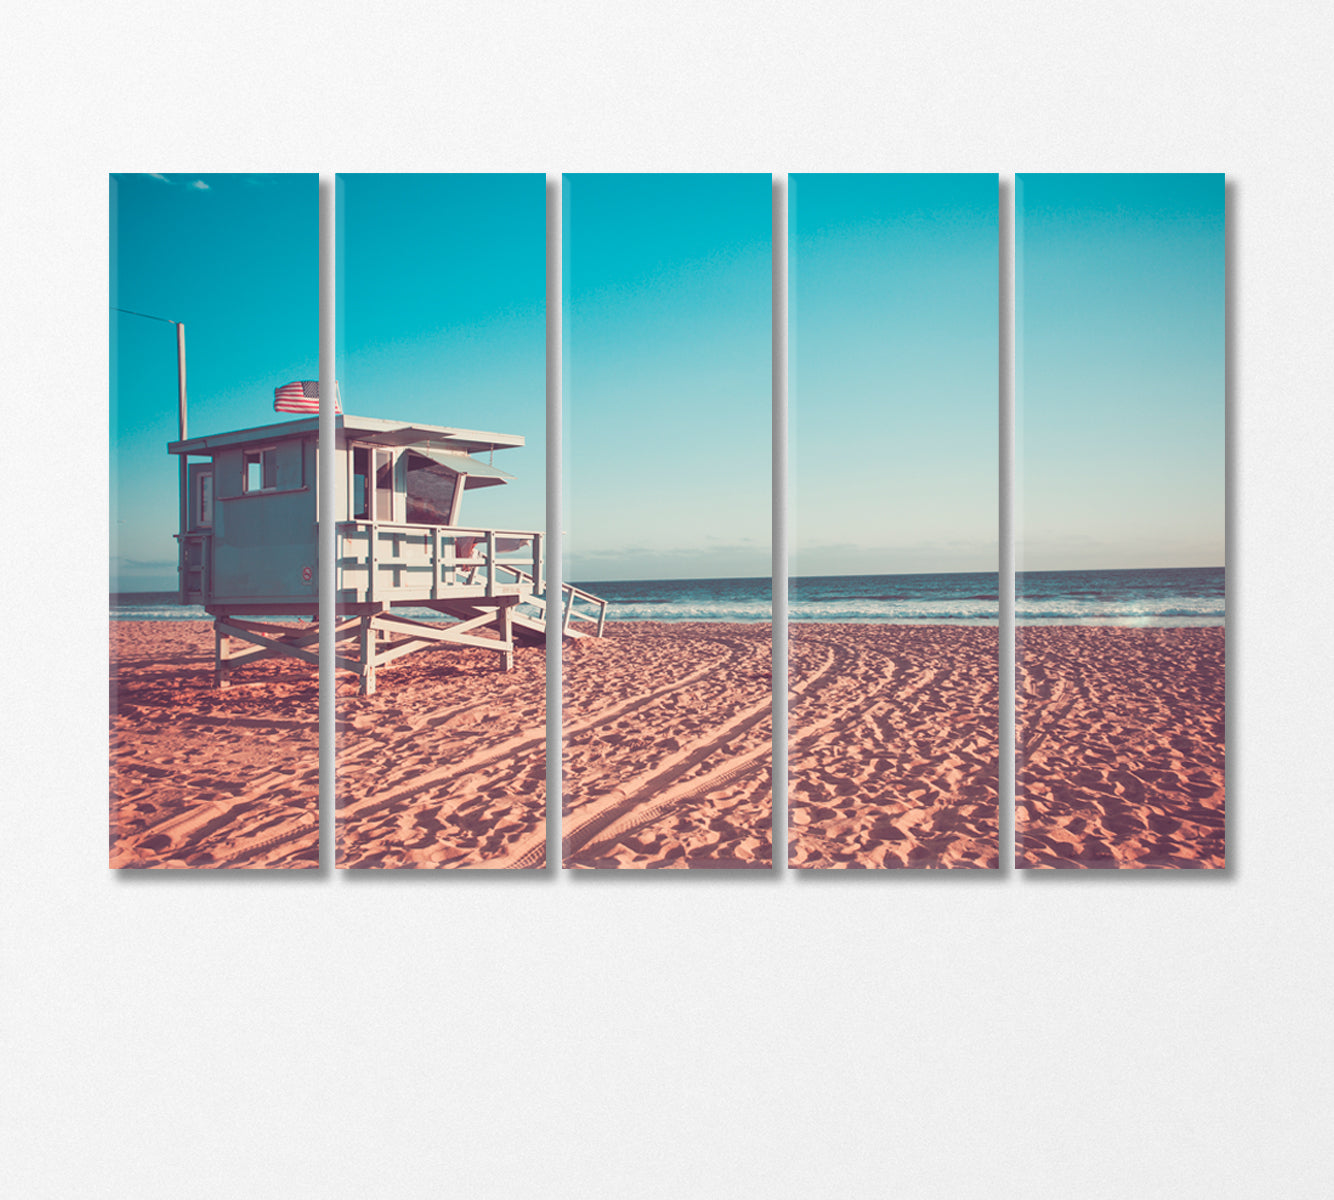 Lifeguard Tower Santa Monica California USA Canvas Print-Canvas Print-CetArt-5 Panels-36x24 inches-CetArt